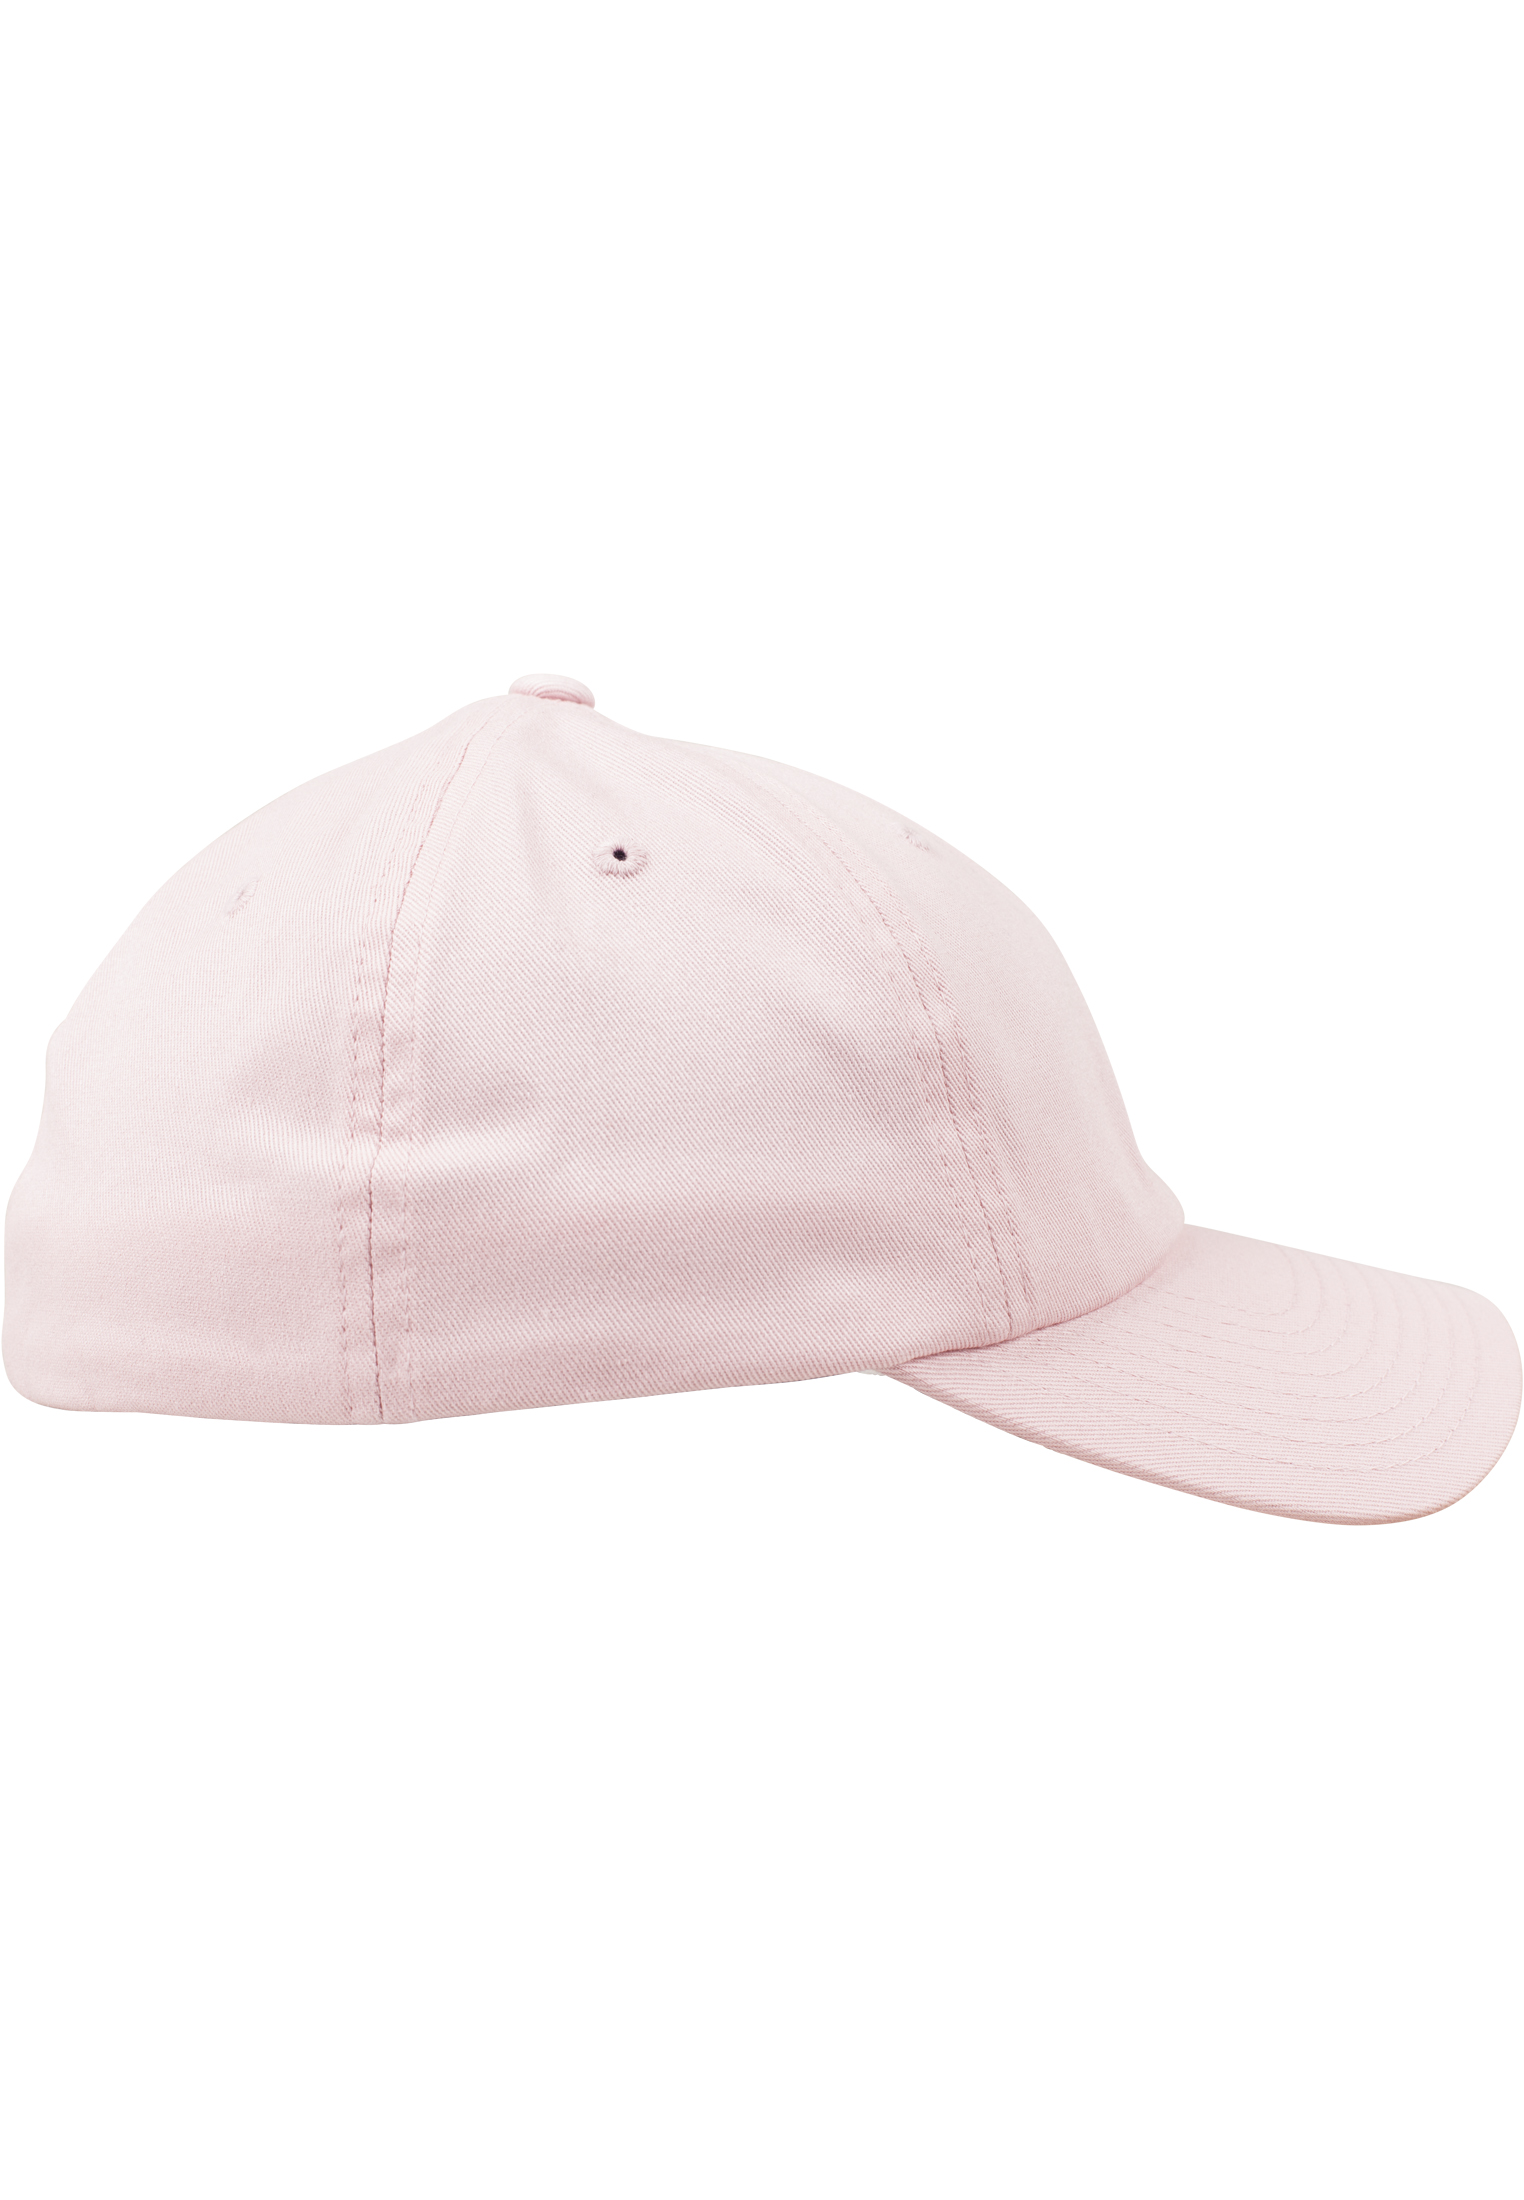 Dad Caps Flexfit Cotton Twill Dad Cap in Farbe pink